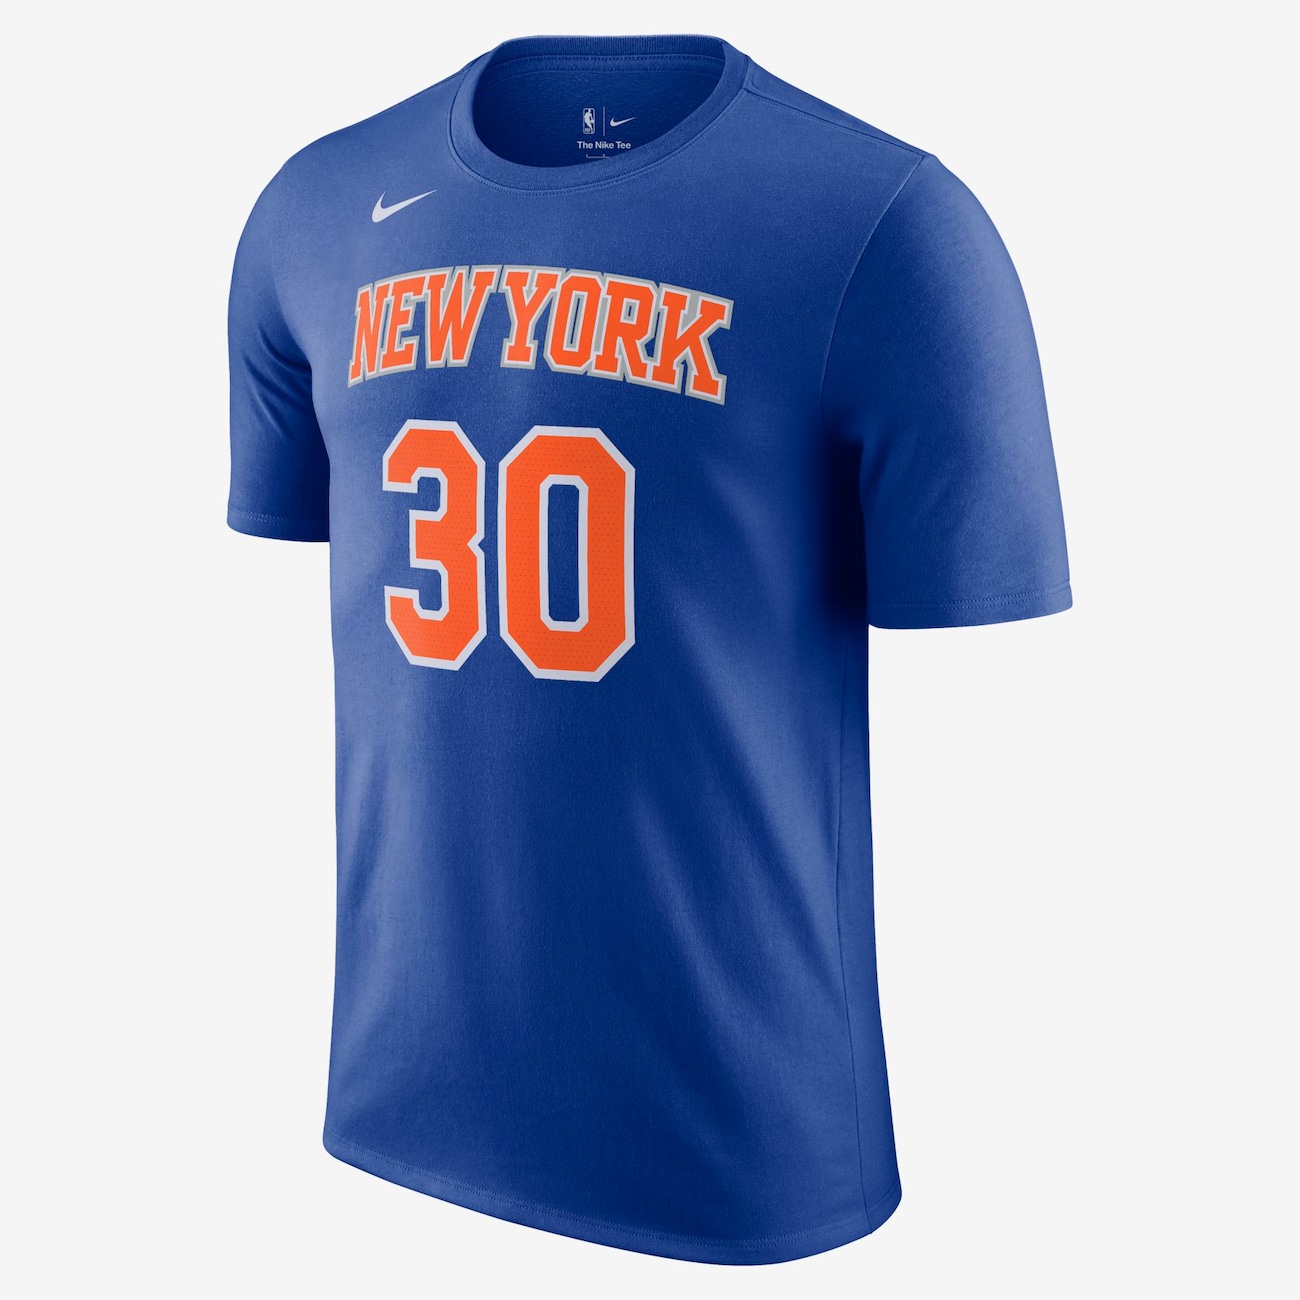 Camiseta Nike New York Knicks Masculina